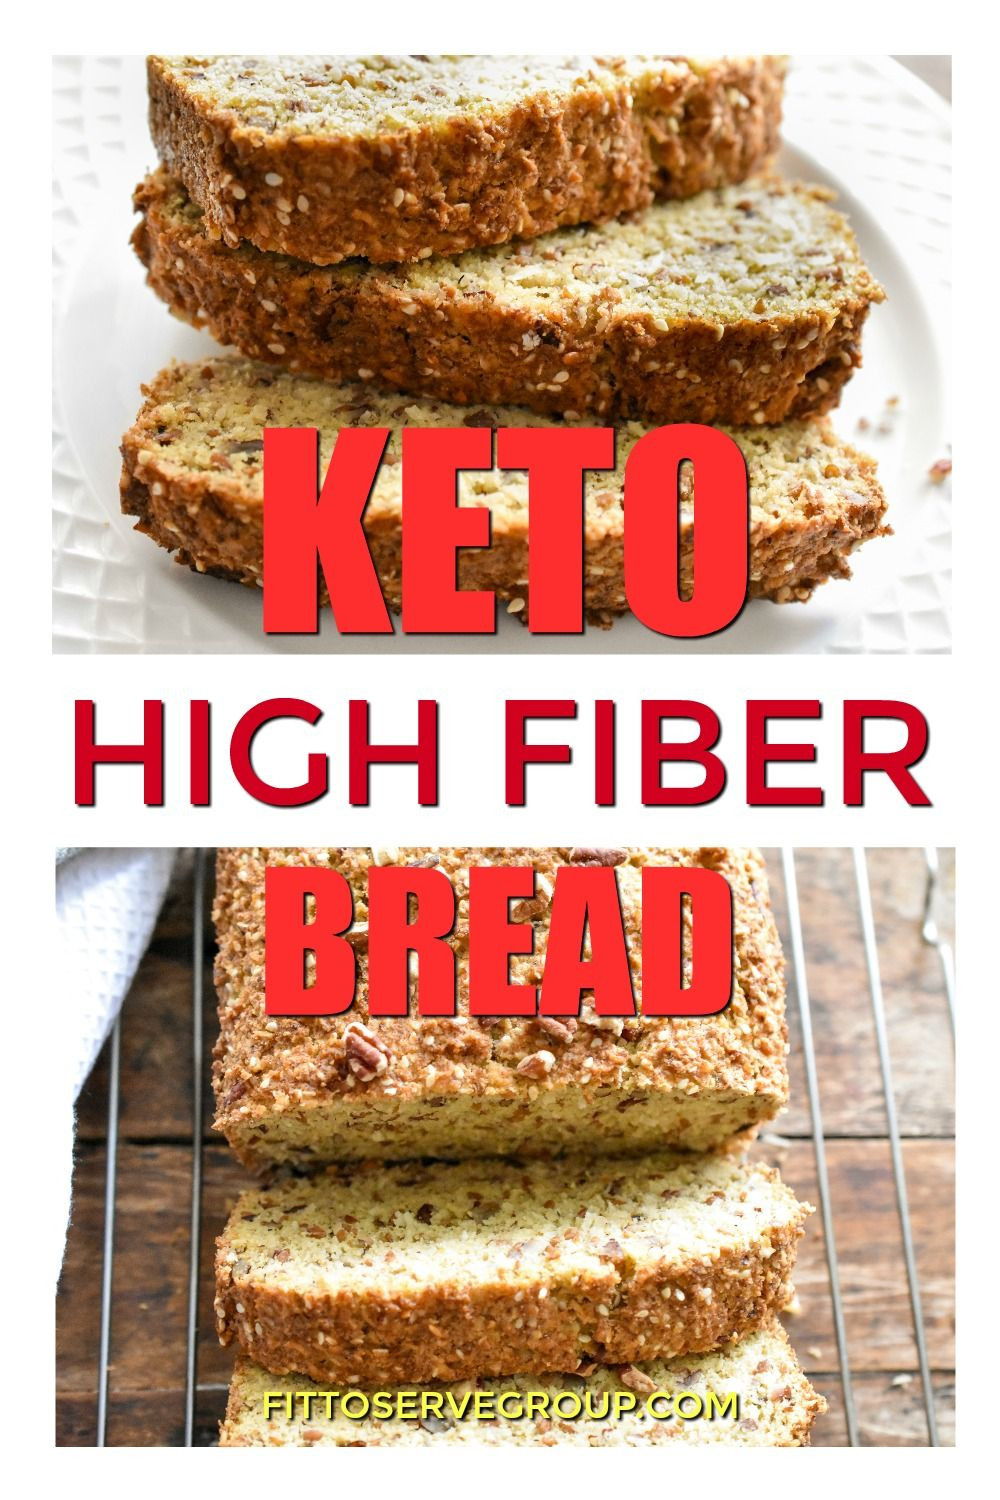 High Fiber Bread Recipe
 Keto High Fiber Bread in 2020